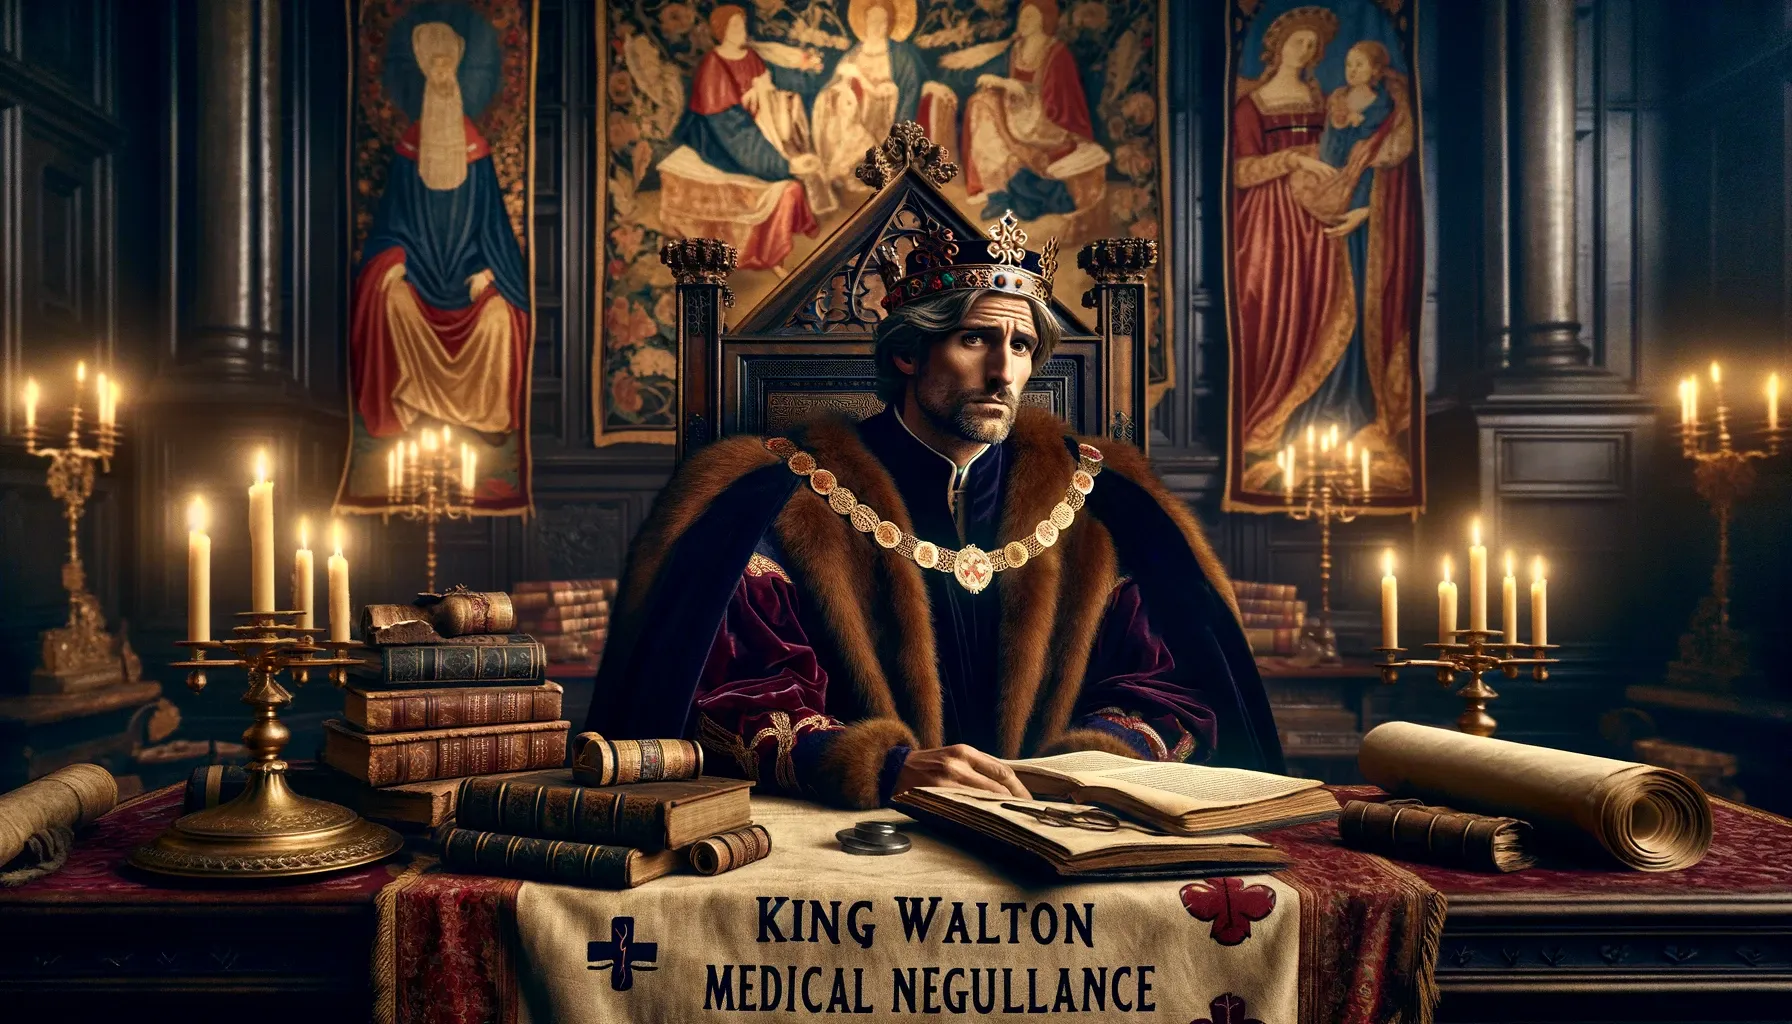 King Walton Medical Negligence